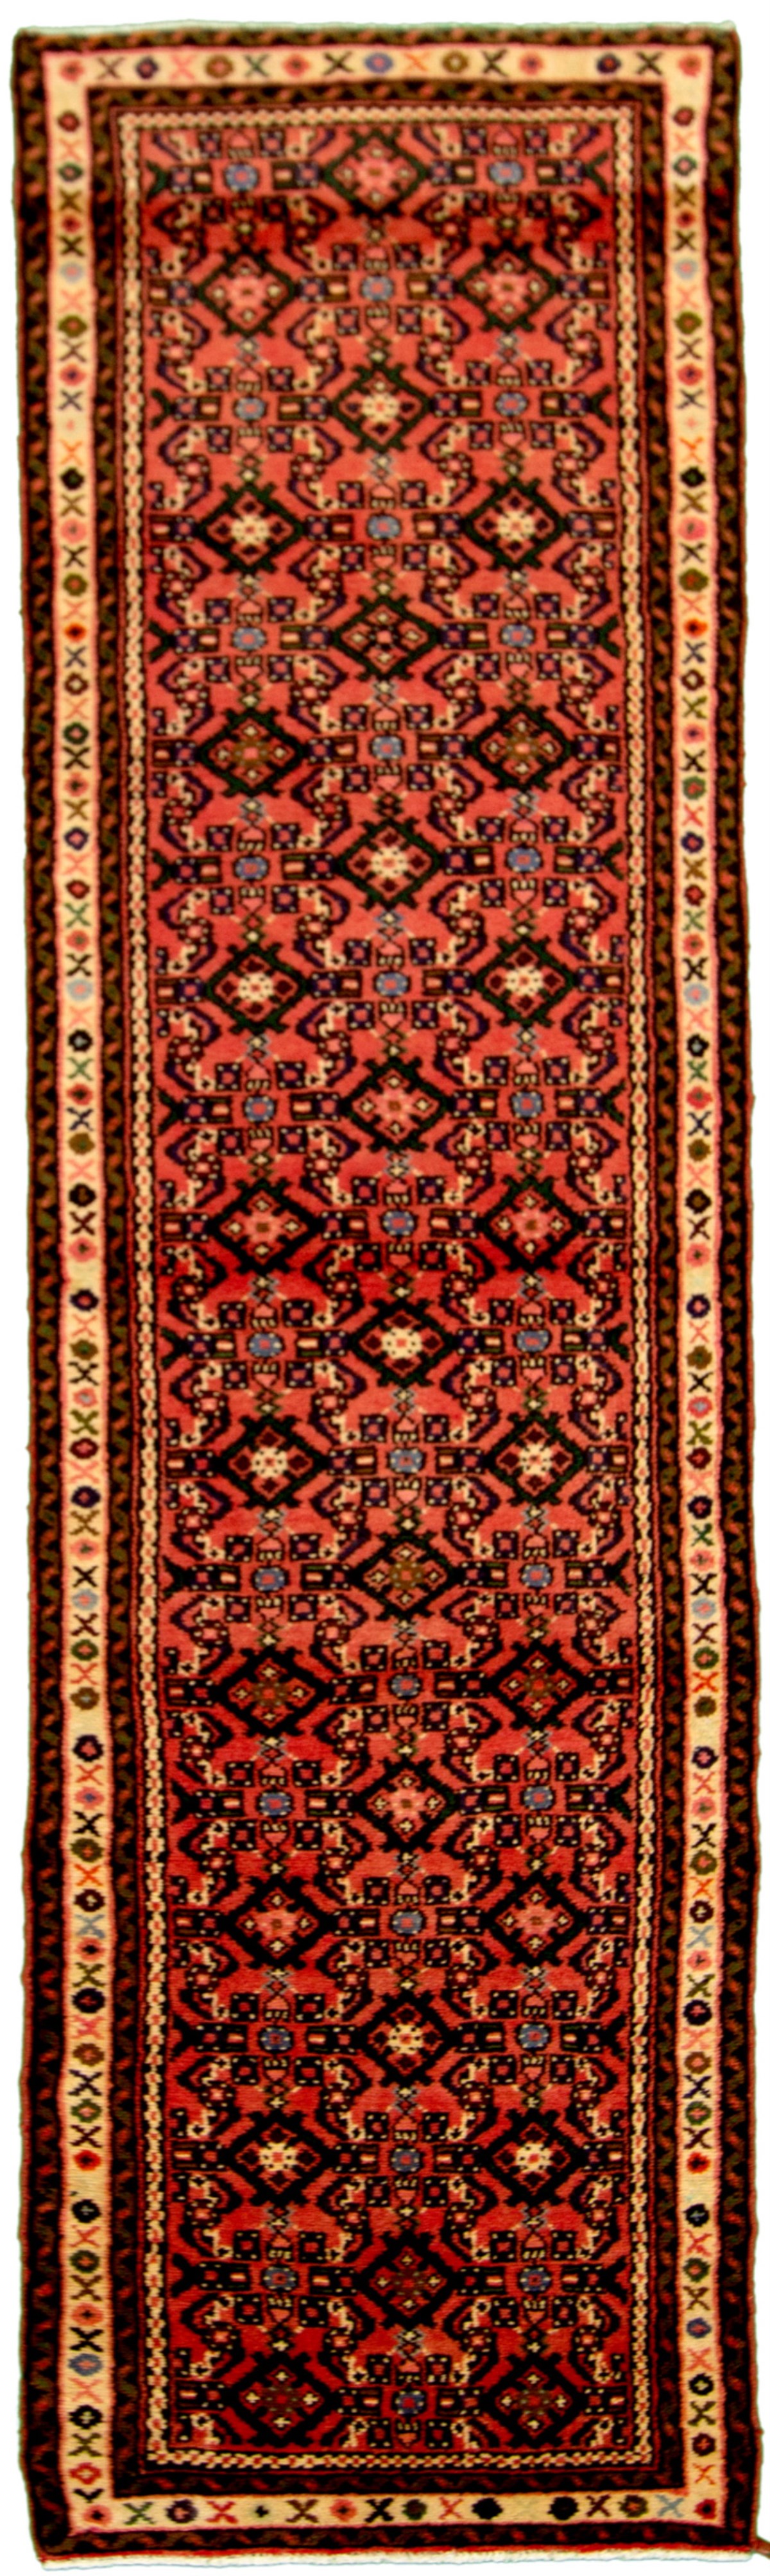 Hand-knotted Hamadan Dark Copper Wool Rug 2'7" x 9'5" Size: 2'7" x 9'5"  